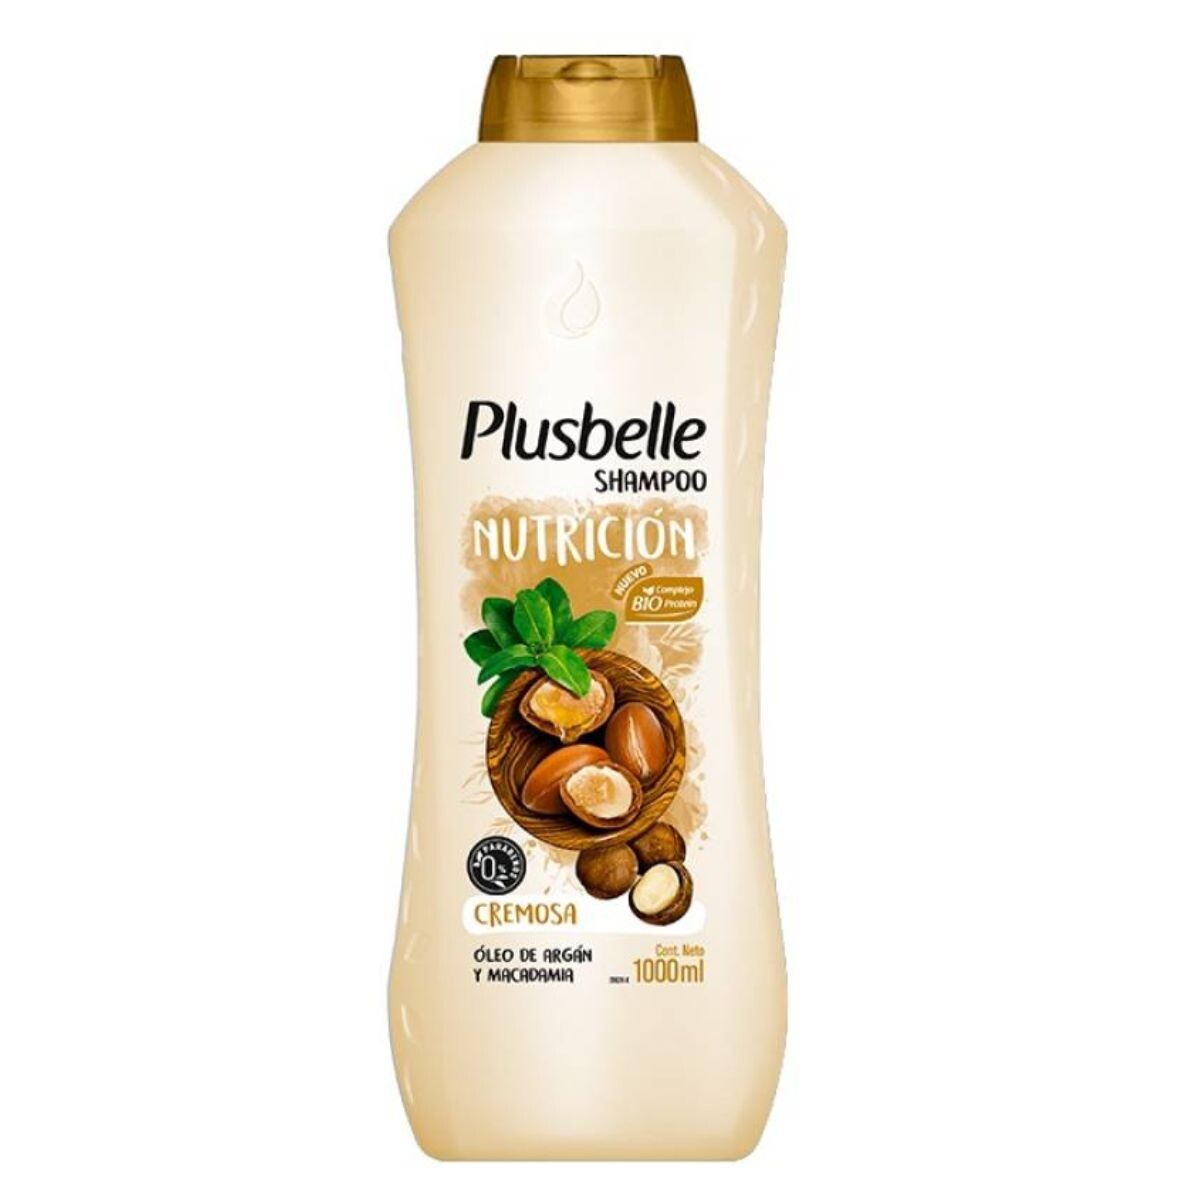 Shampoo Plusbelle Nutrición 1 LT 